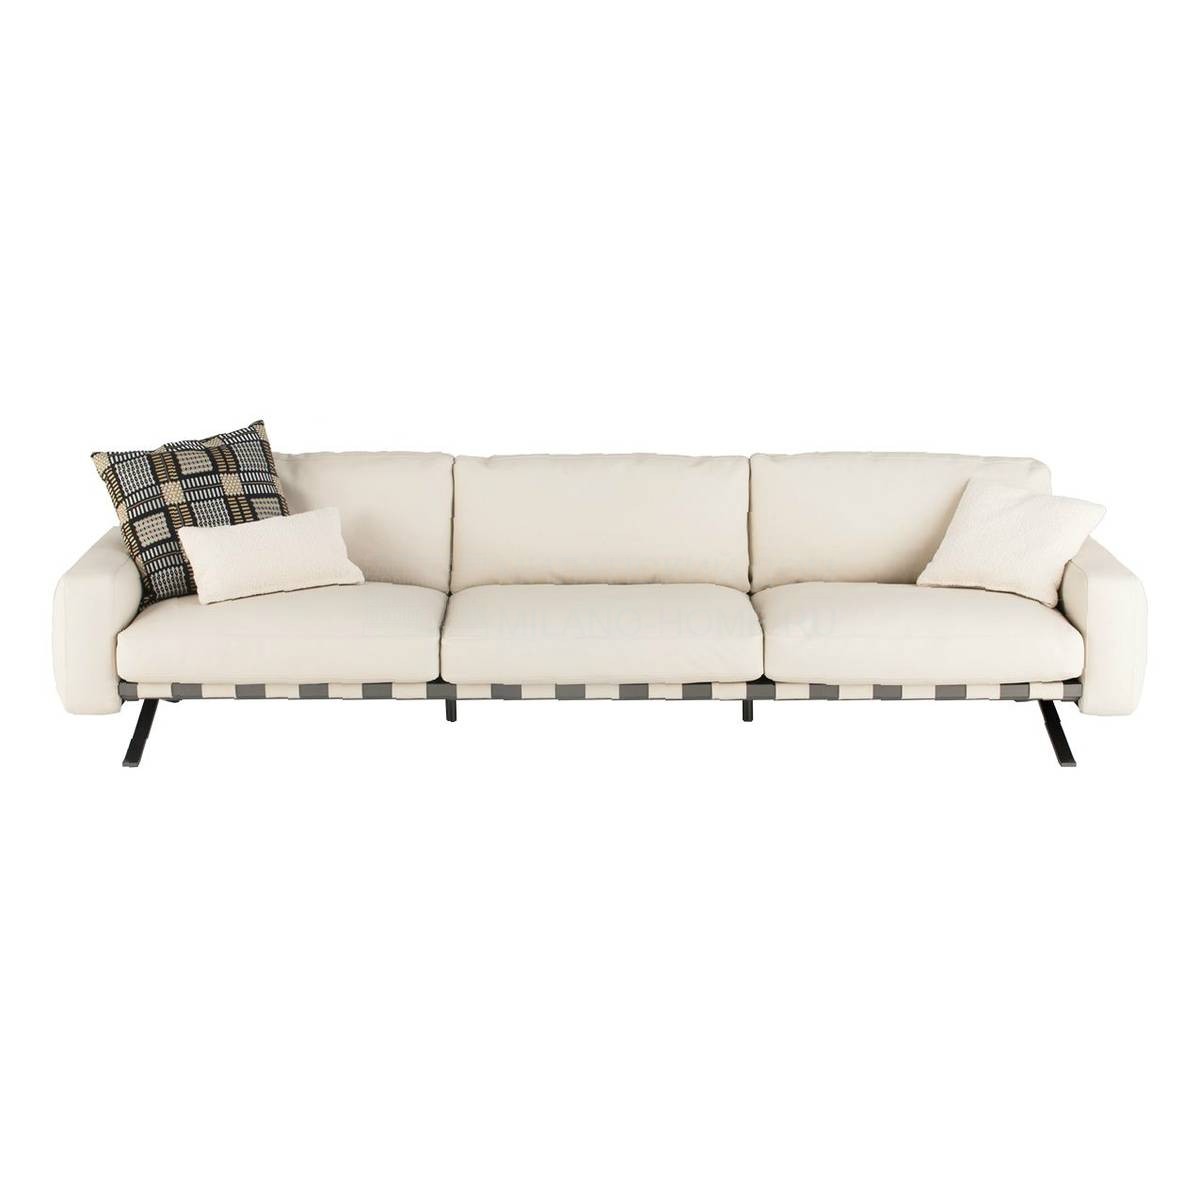 Прямой диван Fenix divano из Италии фабрики DRIADE